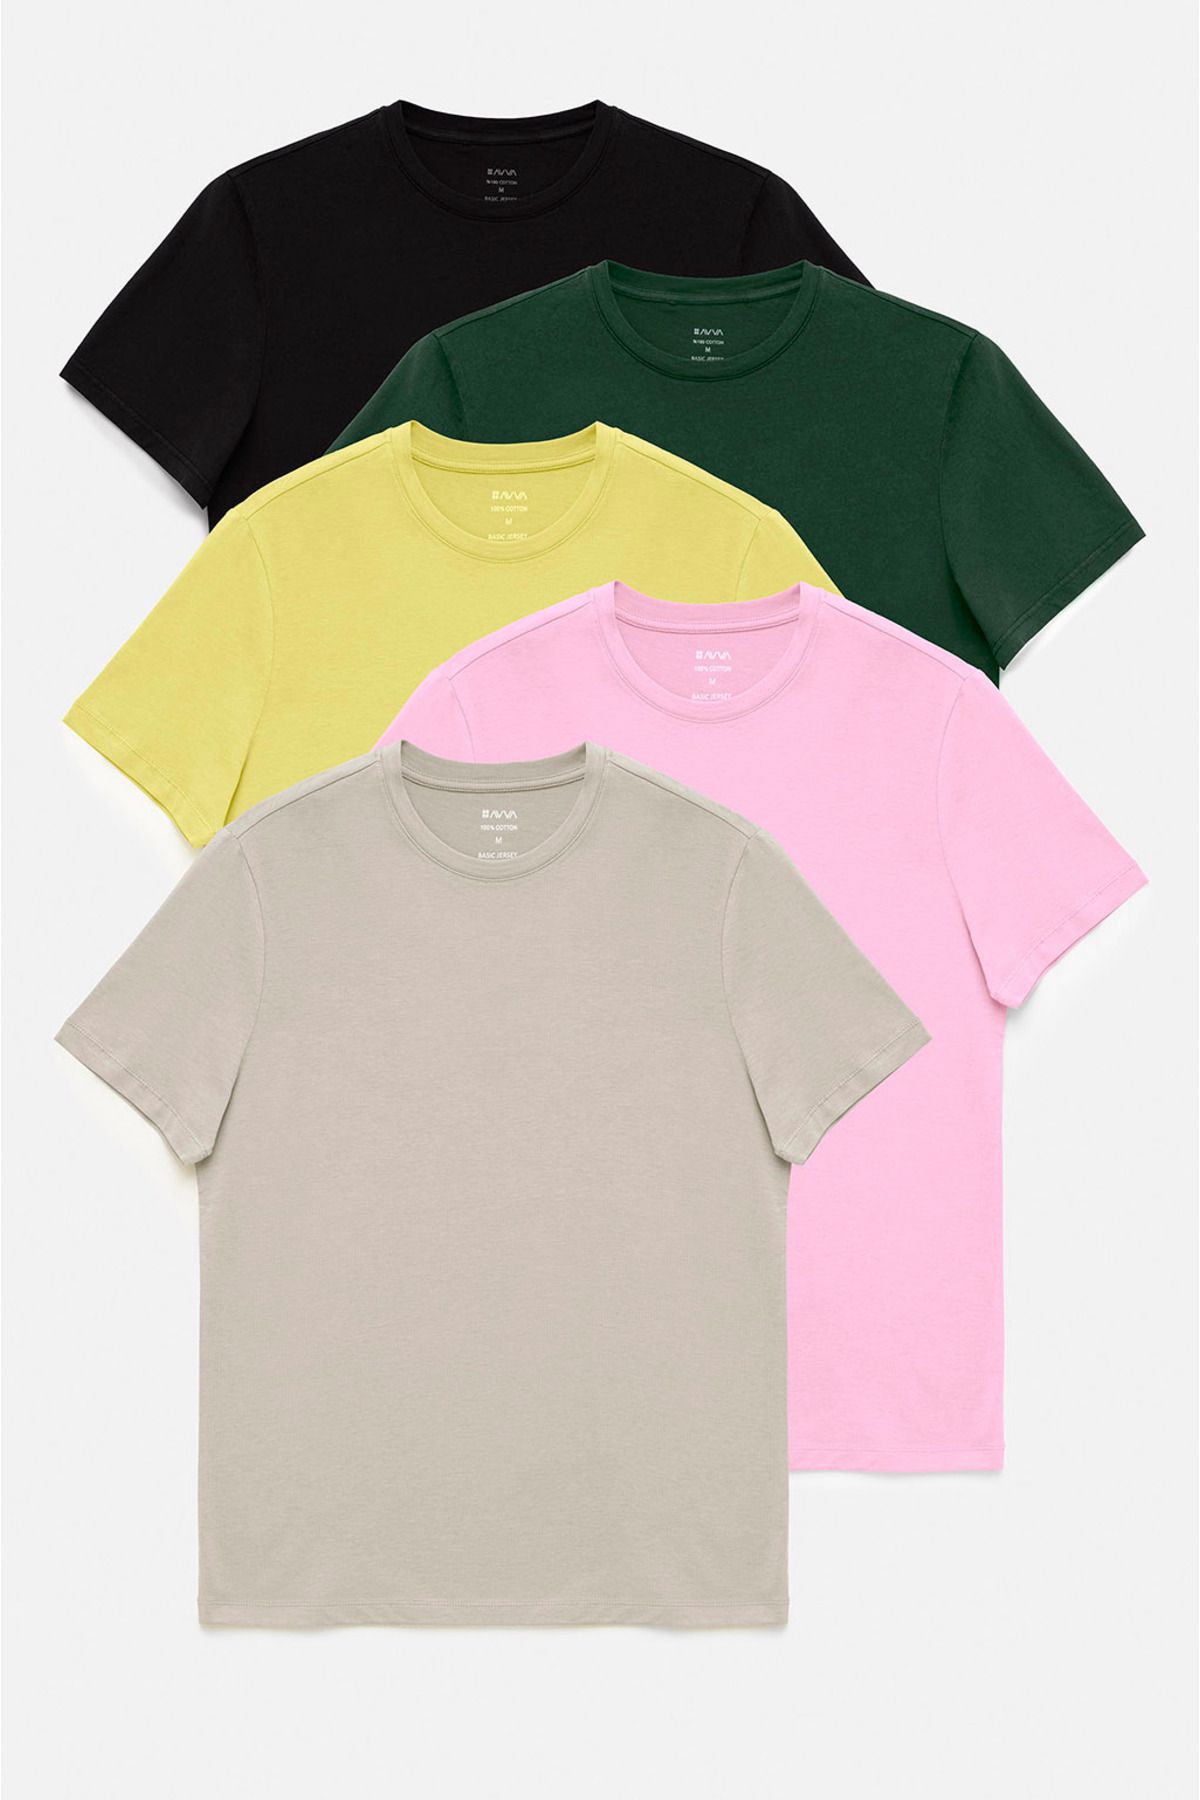 Avva Erkek Siyah-bej-sarı-açık Pembe-yeşil T-shirt 5'li %100 Pamuk Bisiklet Yaka Regular Fit E001021